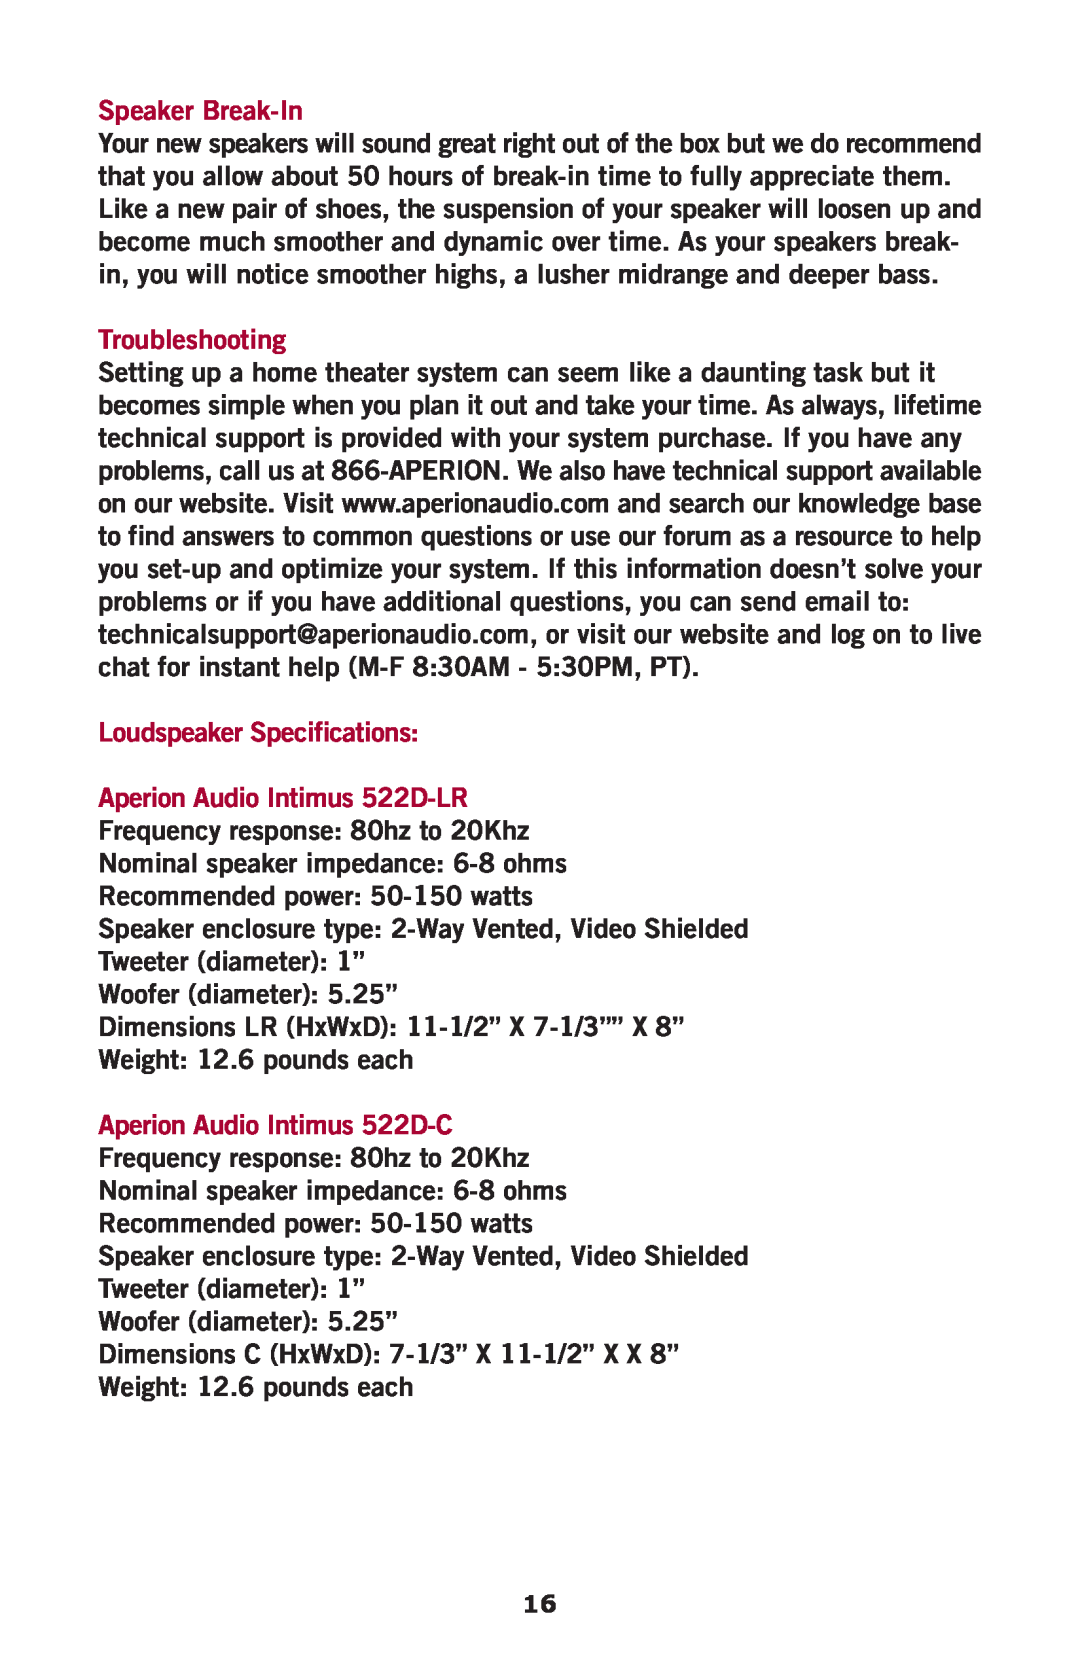 Aperion Audio Intimus Series Speaker Break-In, Troubleshooting, Loudspeaker Specifications, Aperion Audio Intimus 522D-LR 